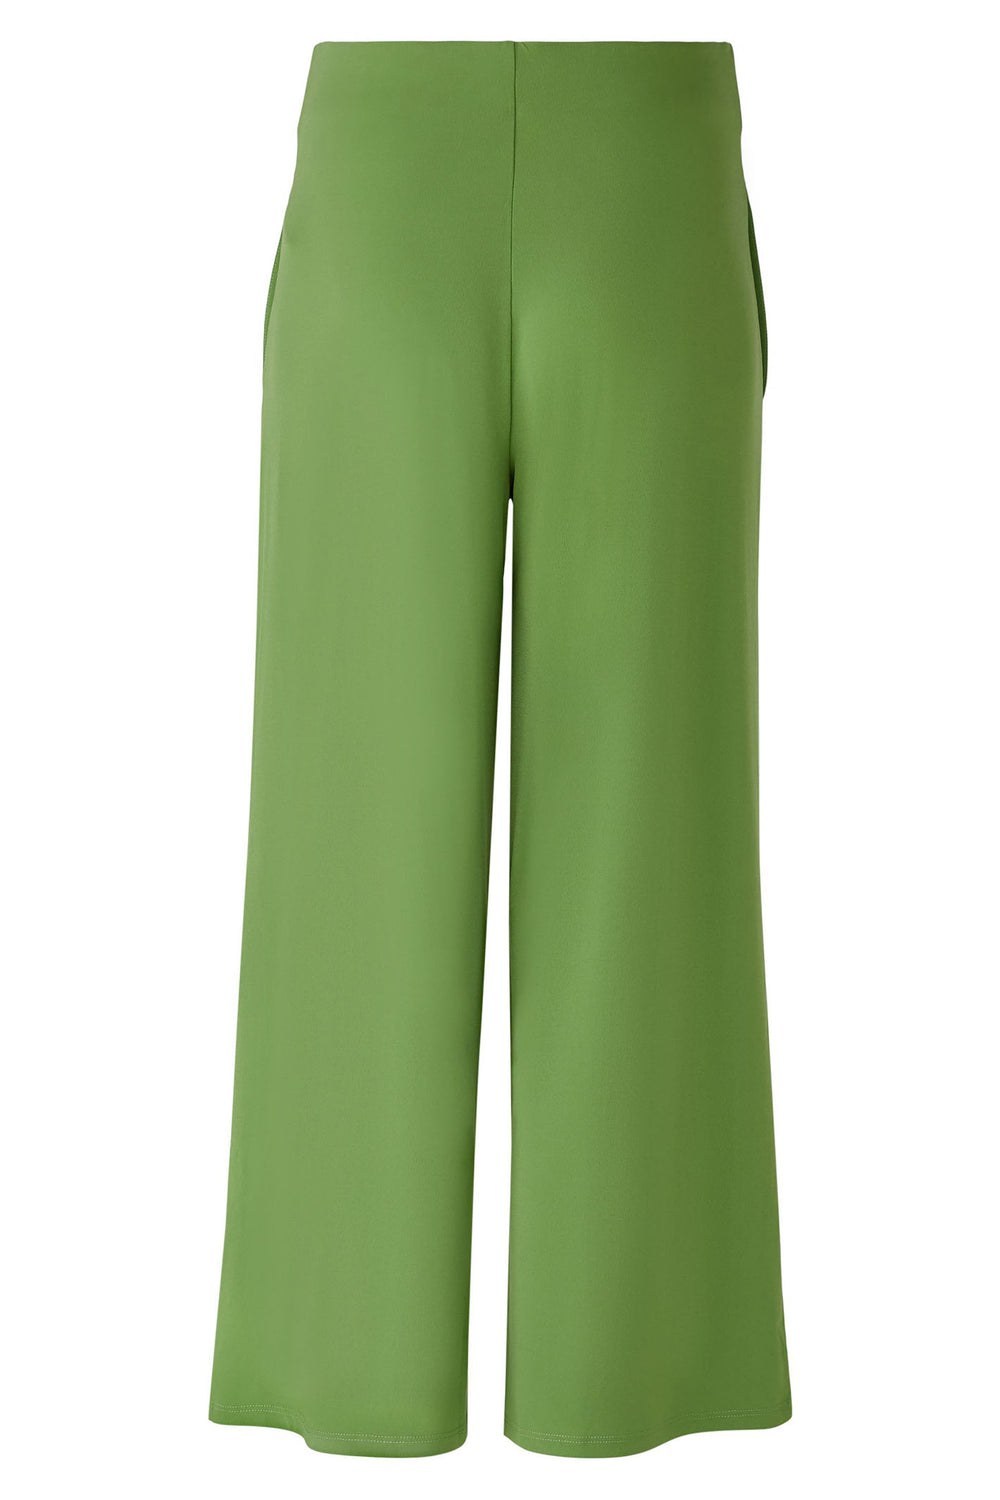 Oui 88391 Green Pull-On Culotte Trousers - Olivia Grace Fashion